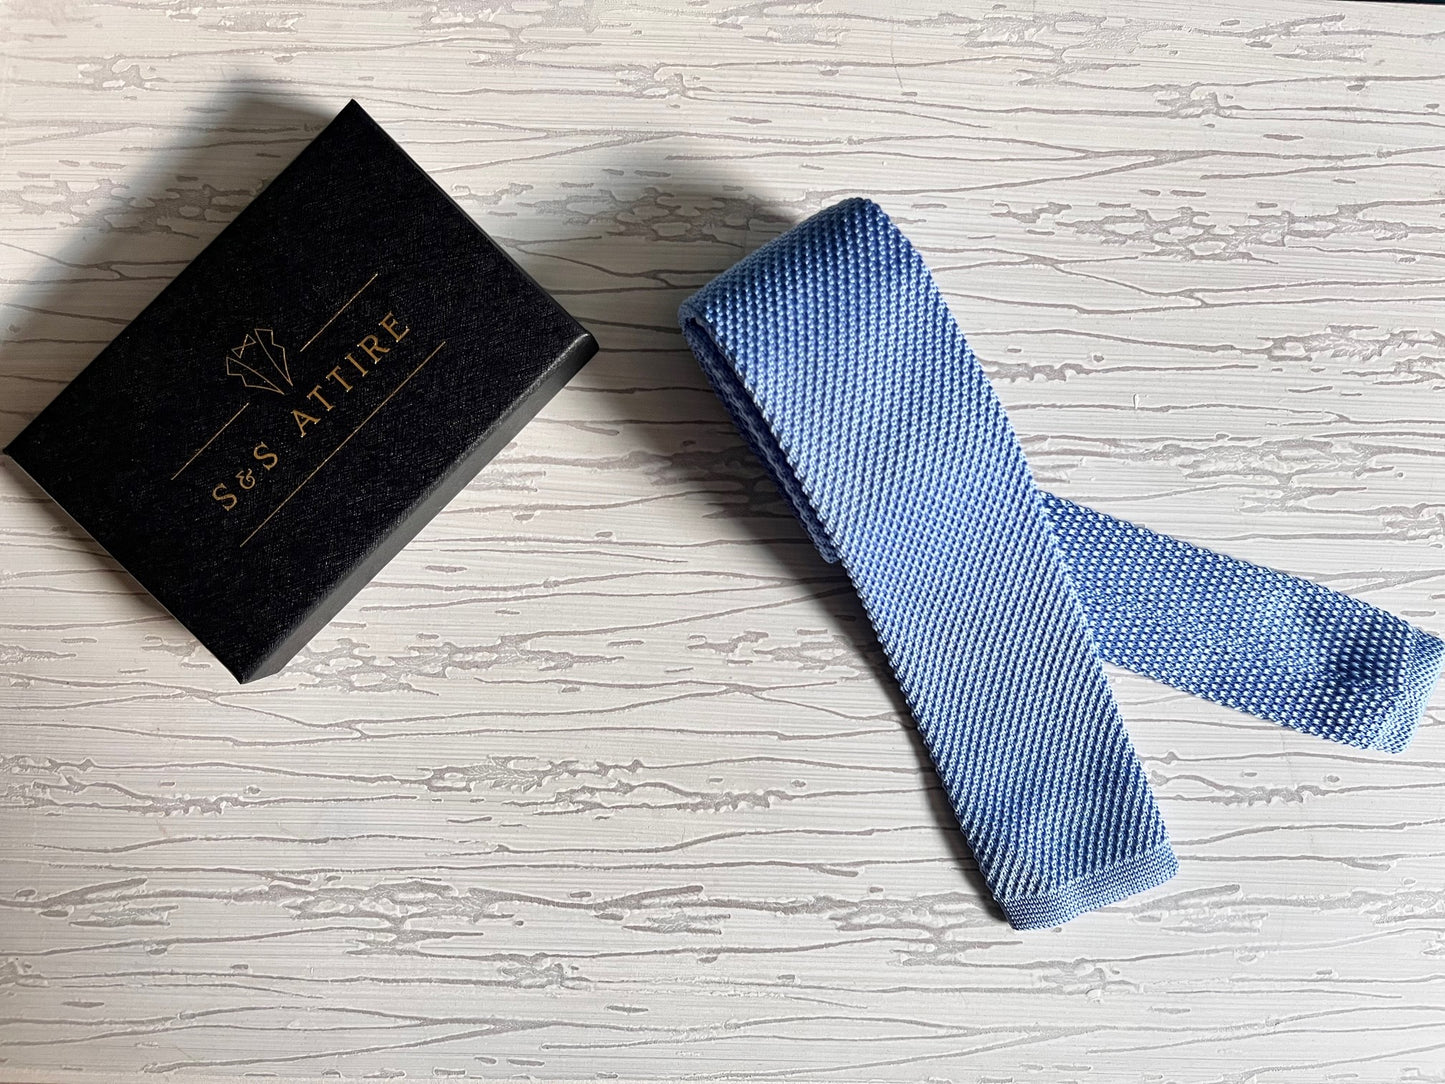 S&S Attire Knitted Tie - Baby blue